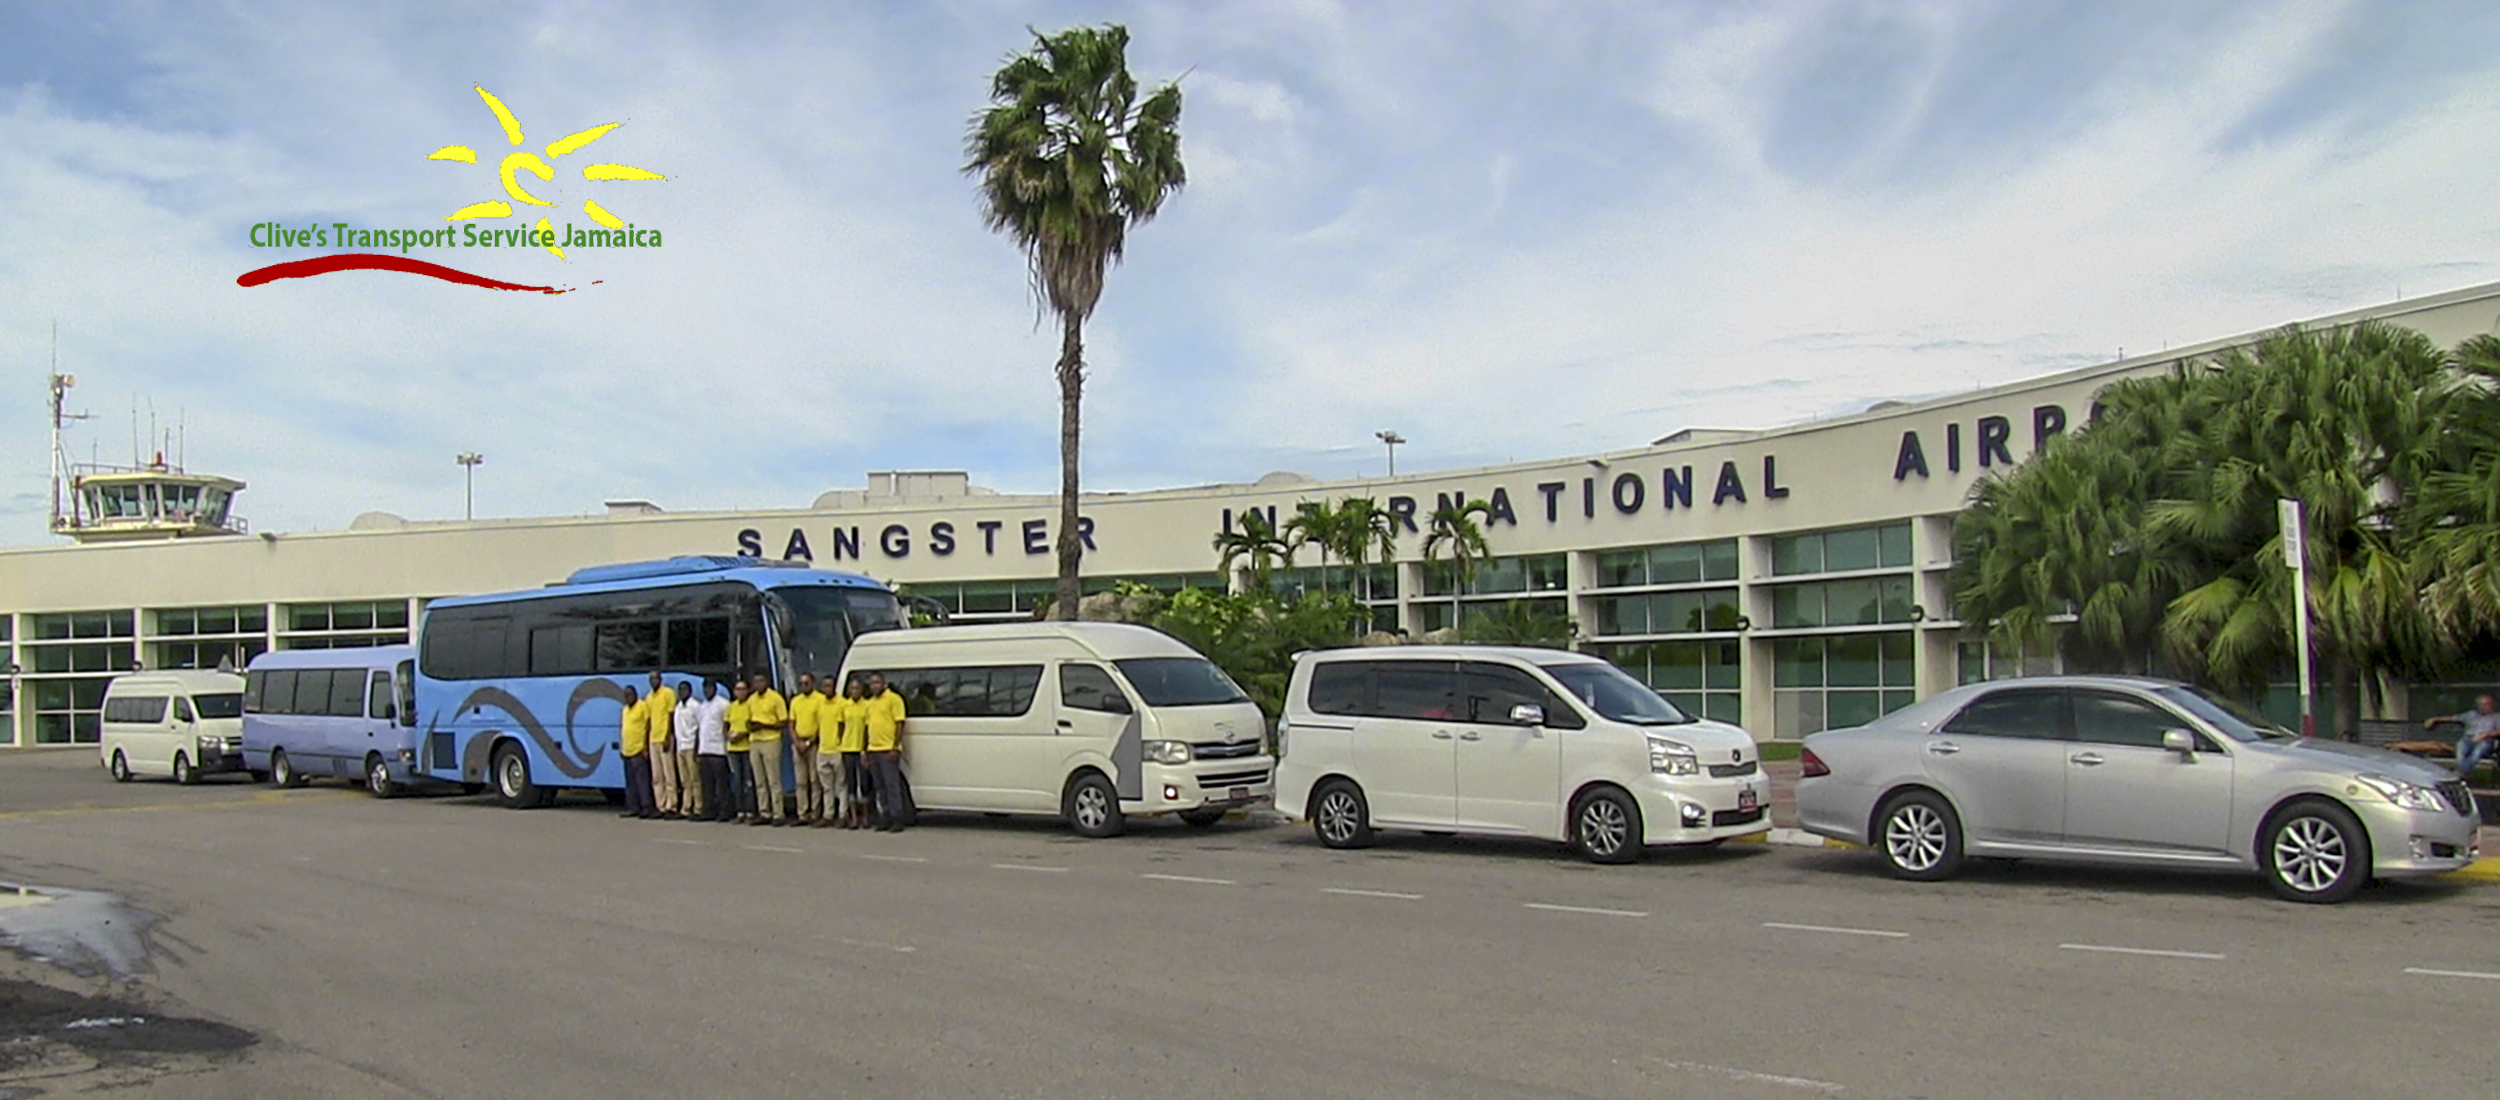 Clive's Transport Service Jamaica providing Jamaican Airport ...